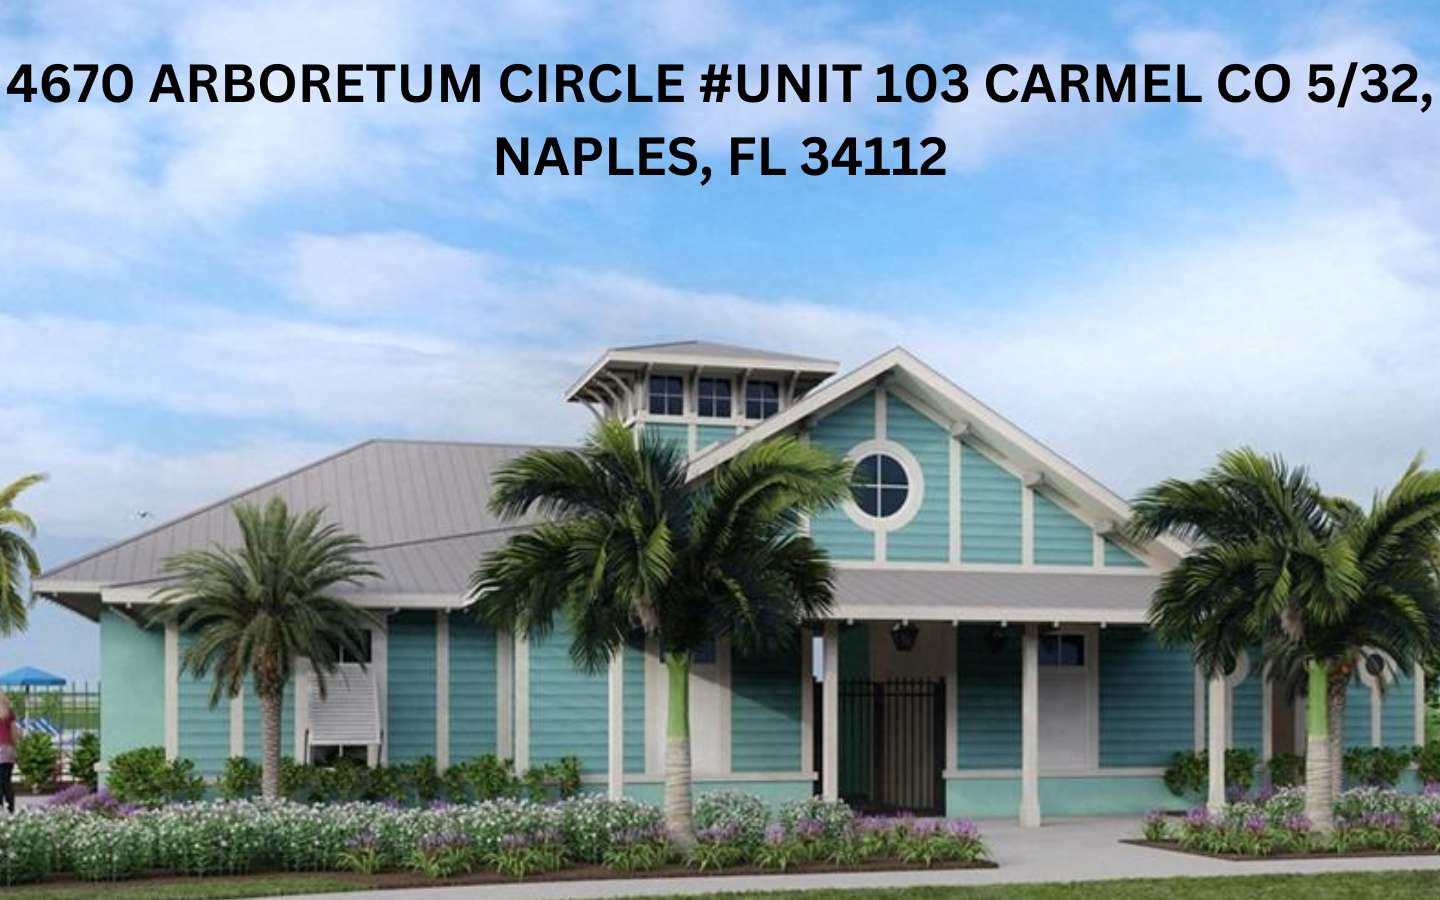 4670 ARBORETUM CIRCLE #UNIT 103 CARMEL CO 5/32, NAPLES, FL 34112